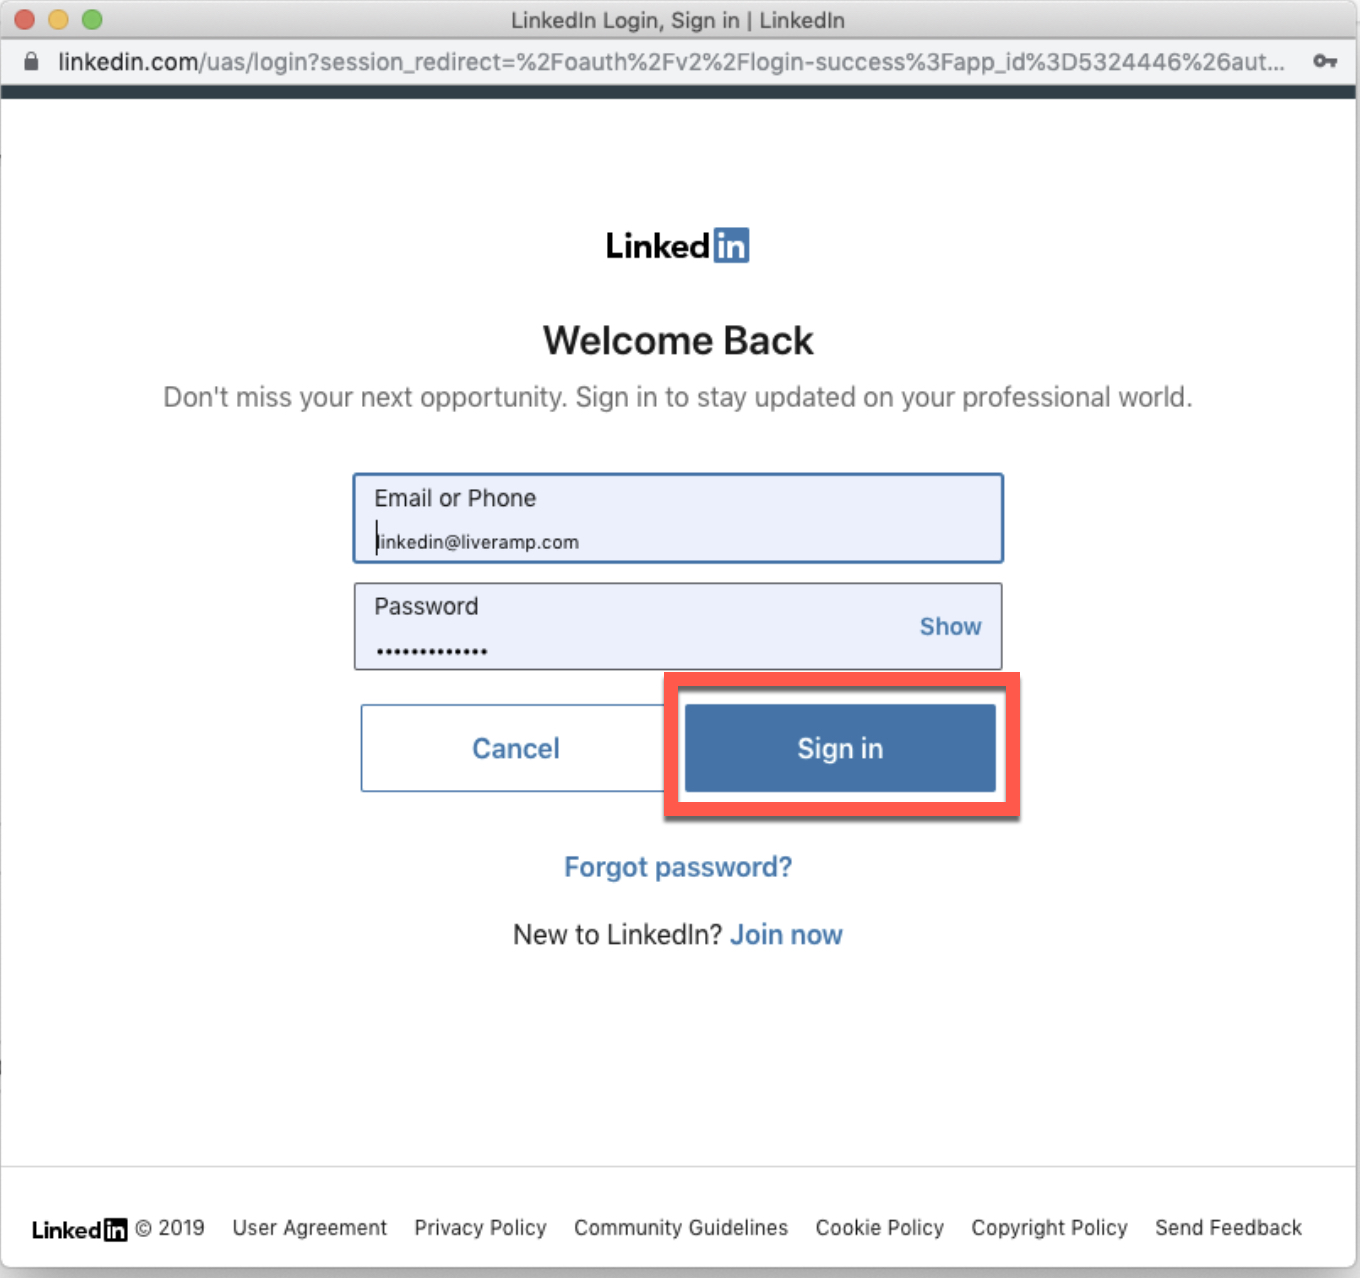 C-Authorize_DA_with_OAuth-LinkedIn-login-screen.jpg